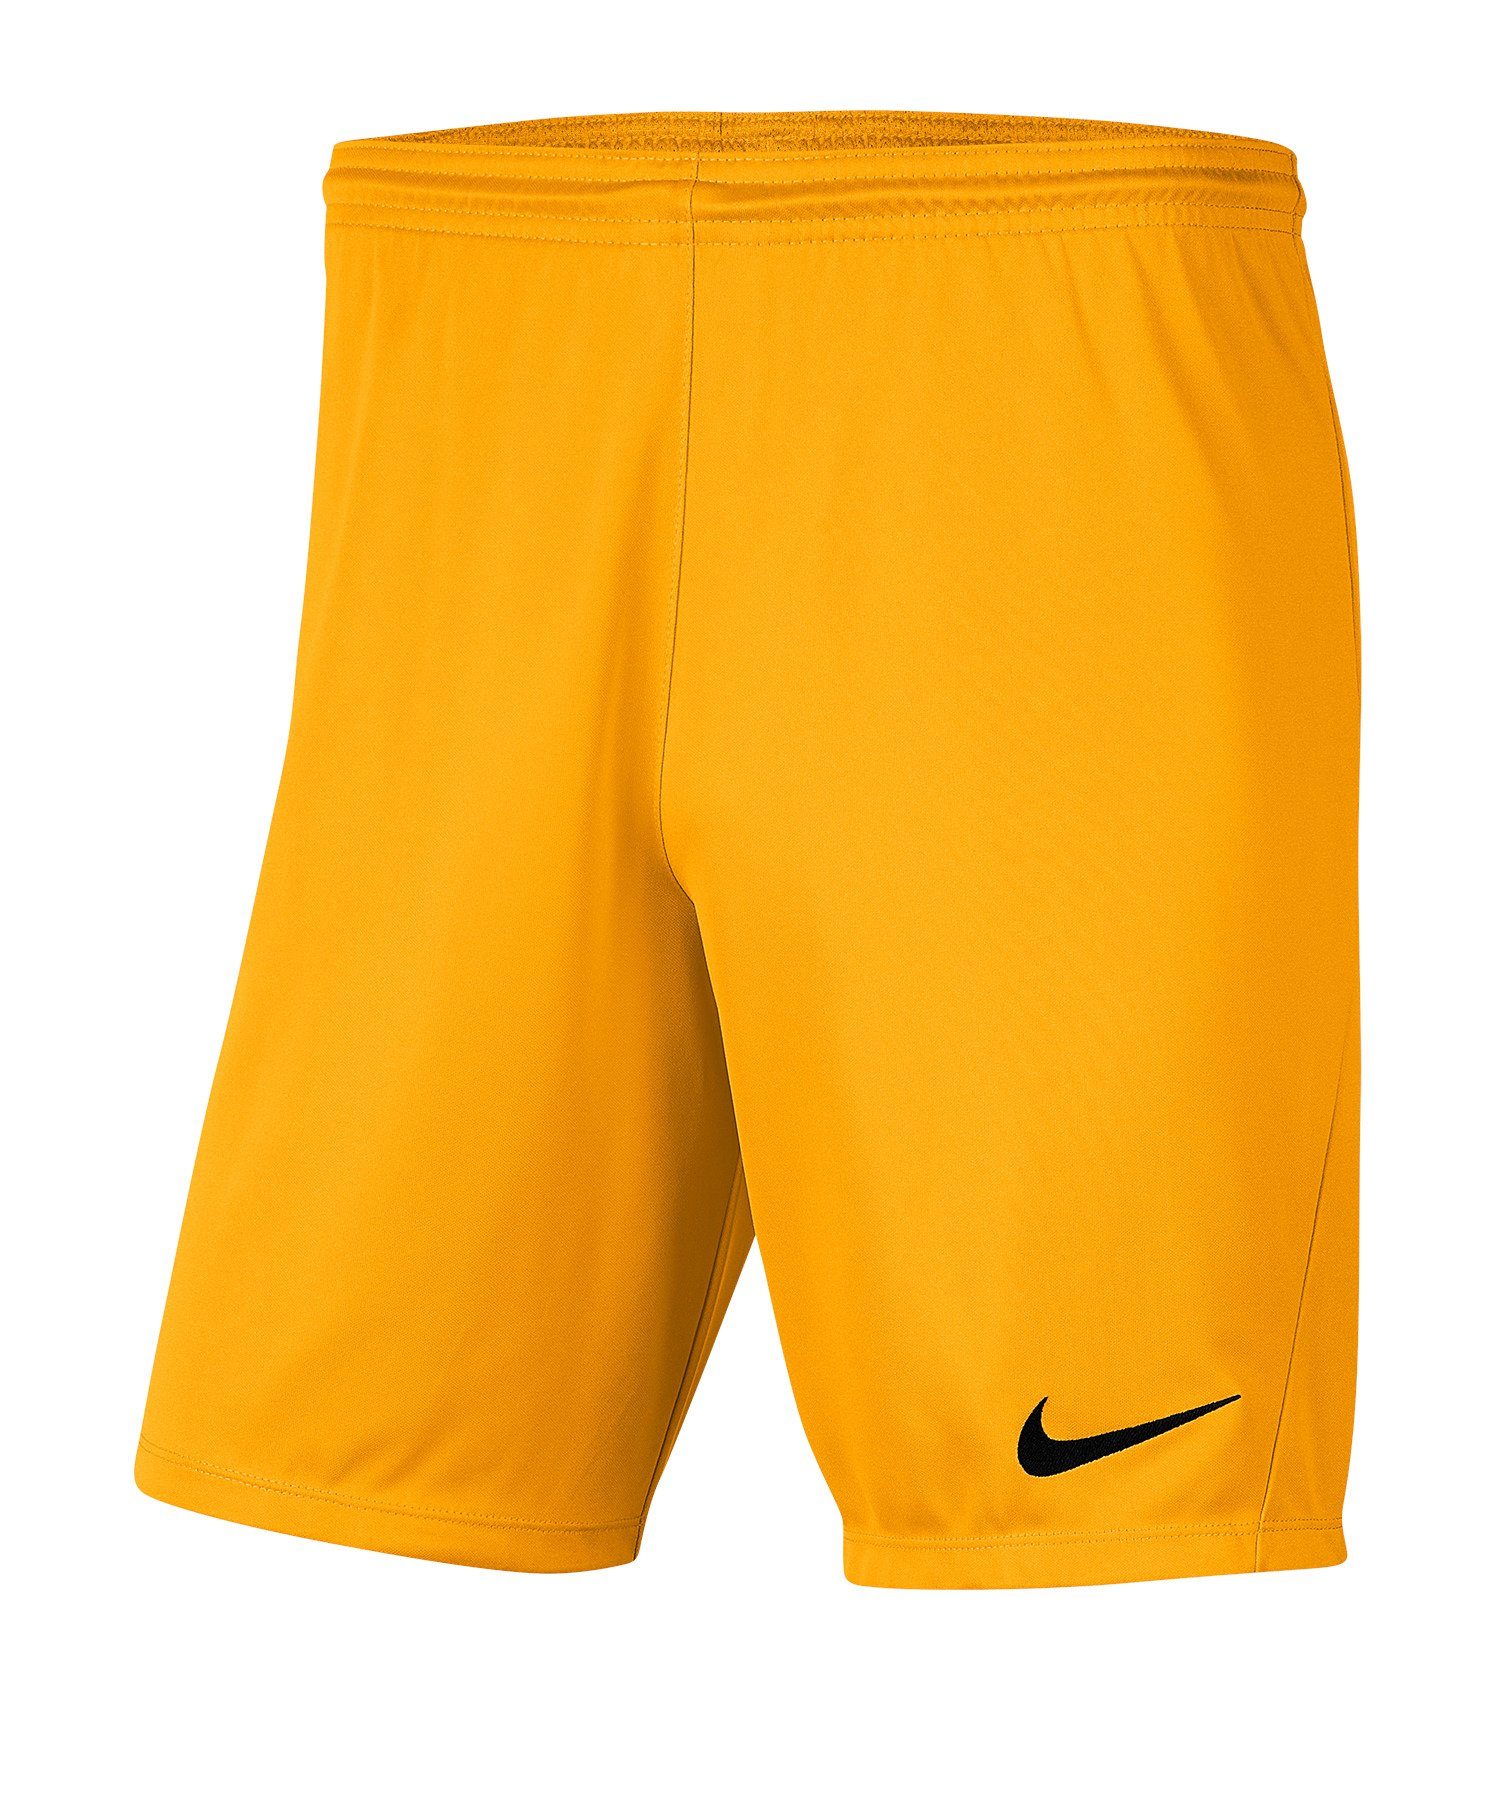 Nike Sporthose Park III Short orangeschwarz